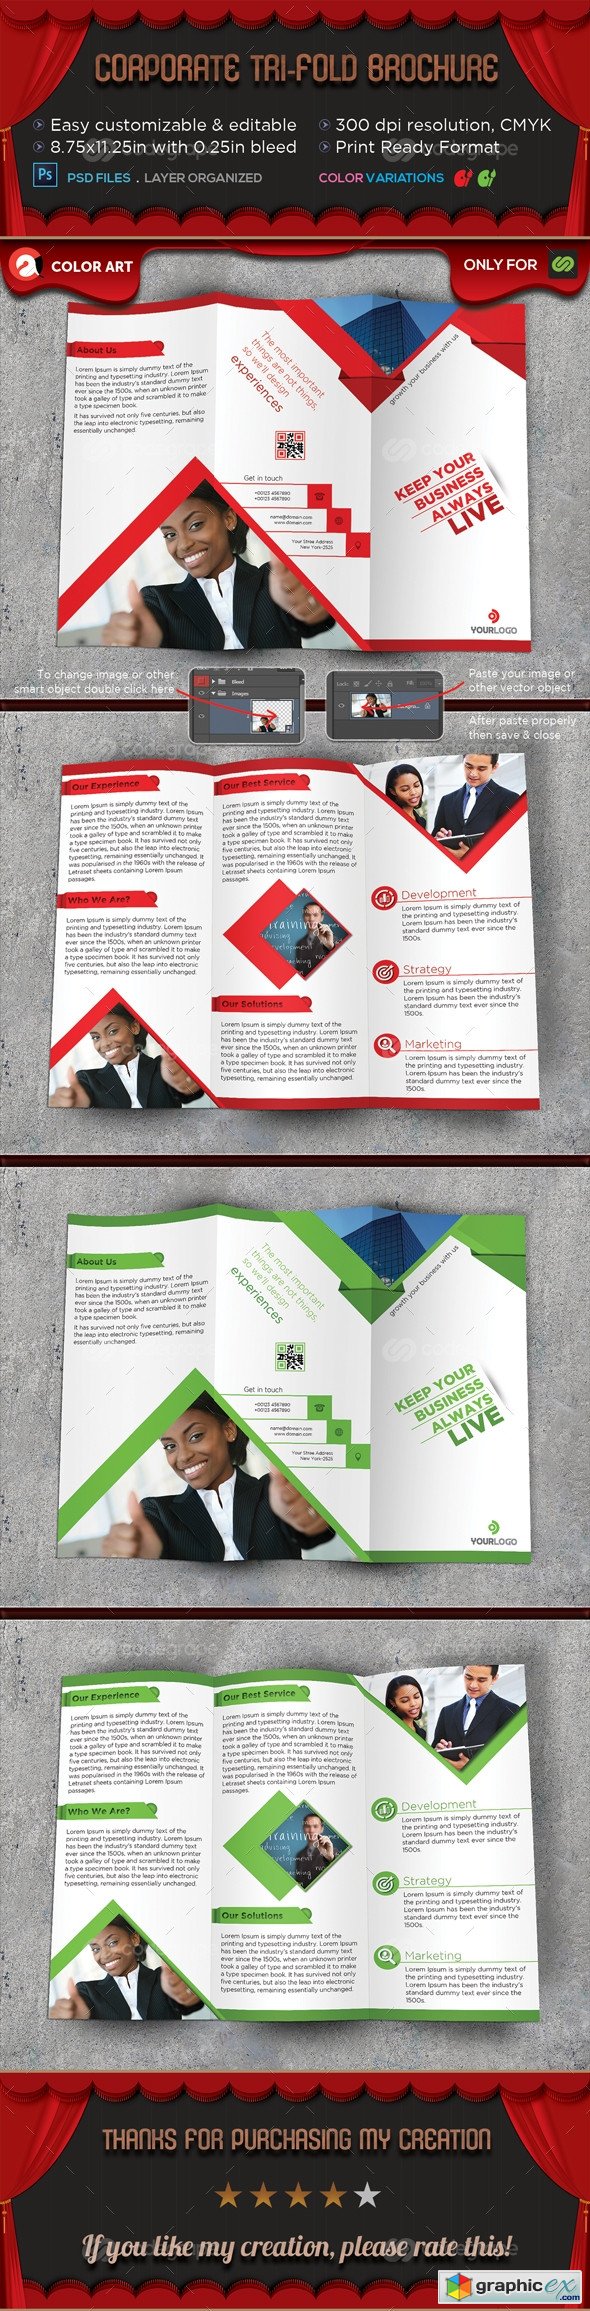 Corporate Tri-fold Brochure v3 9634